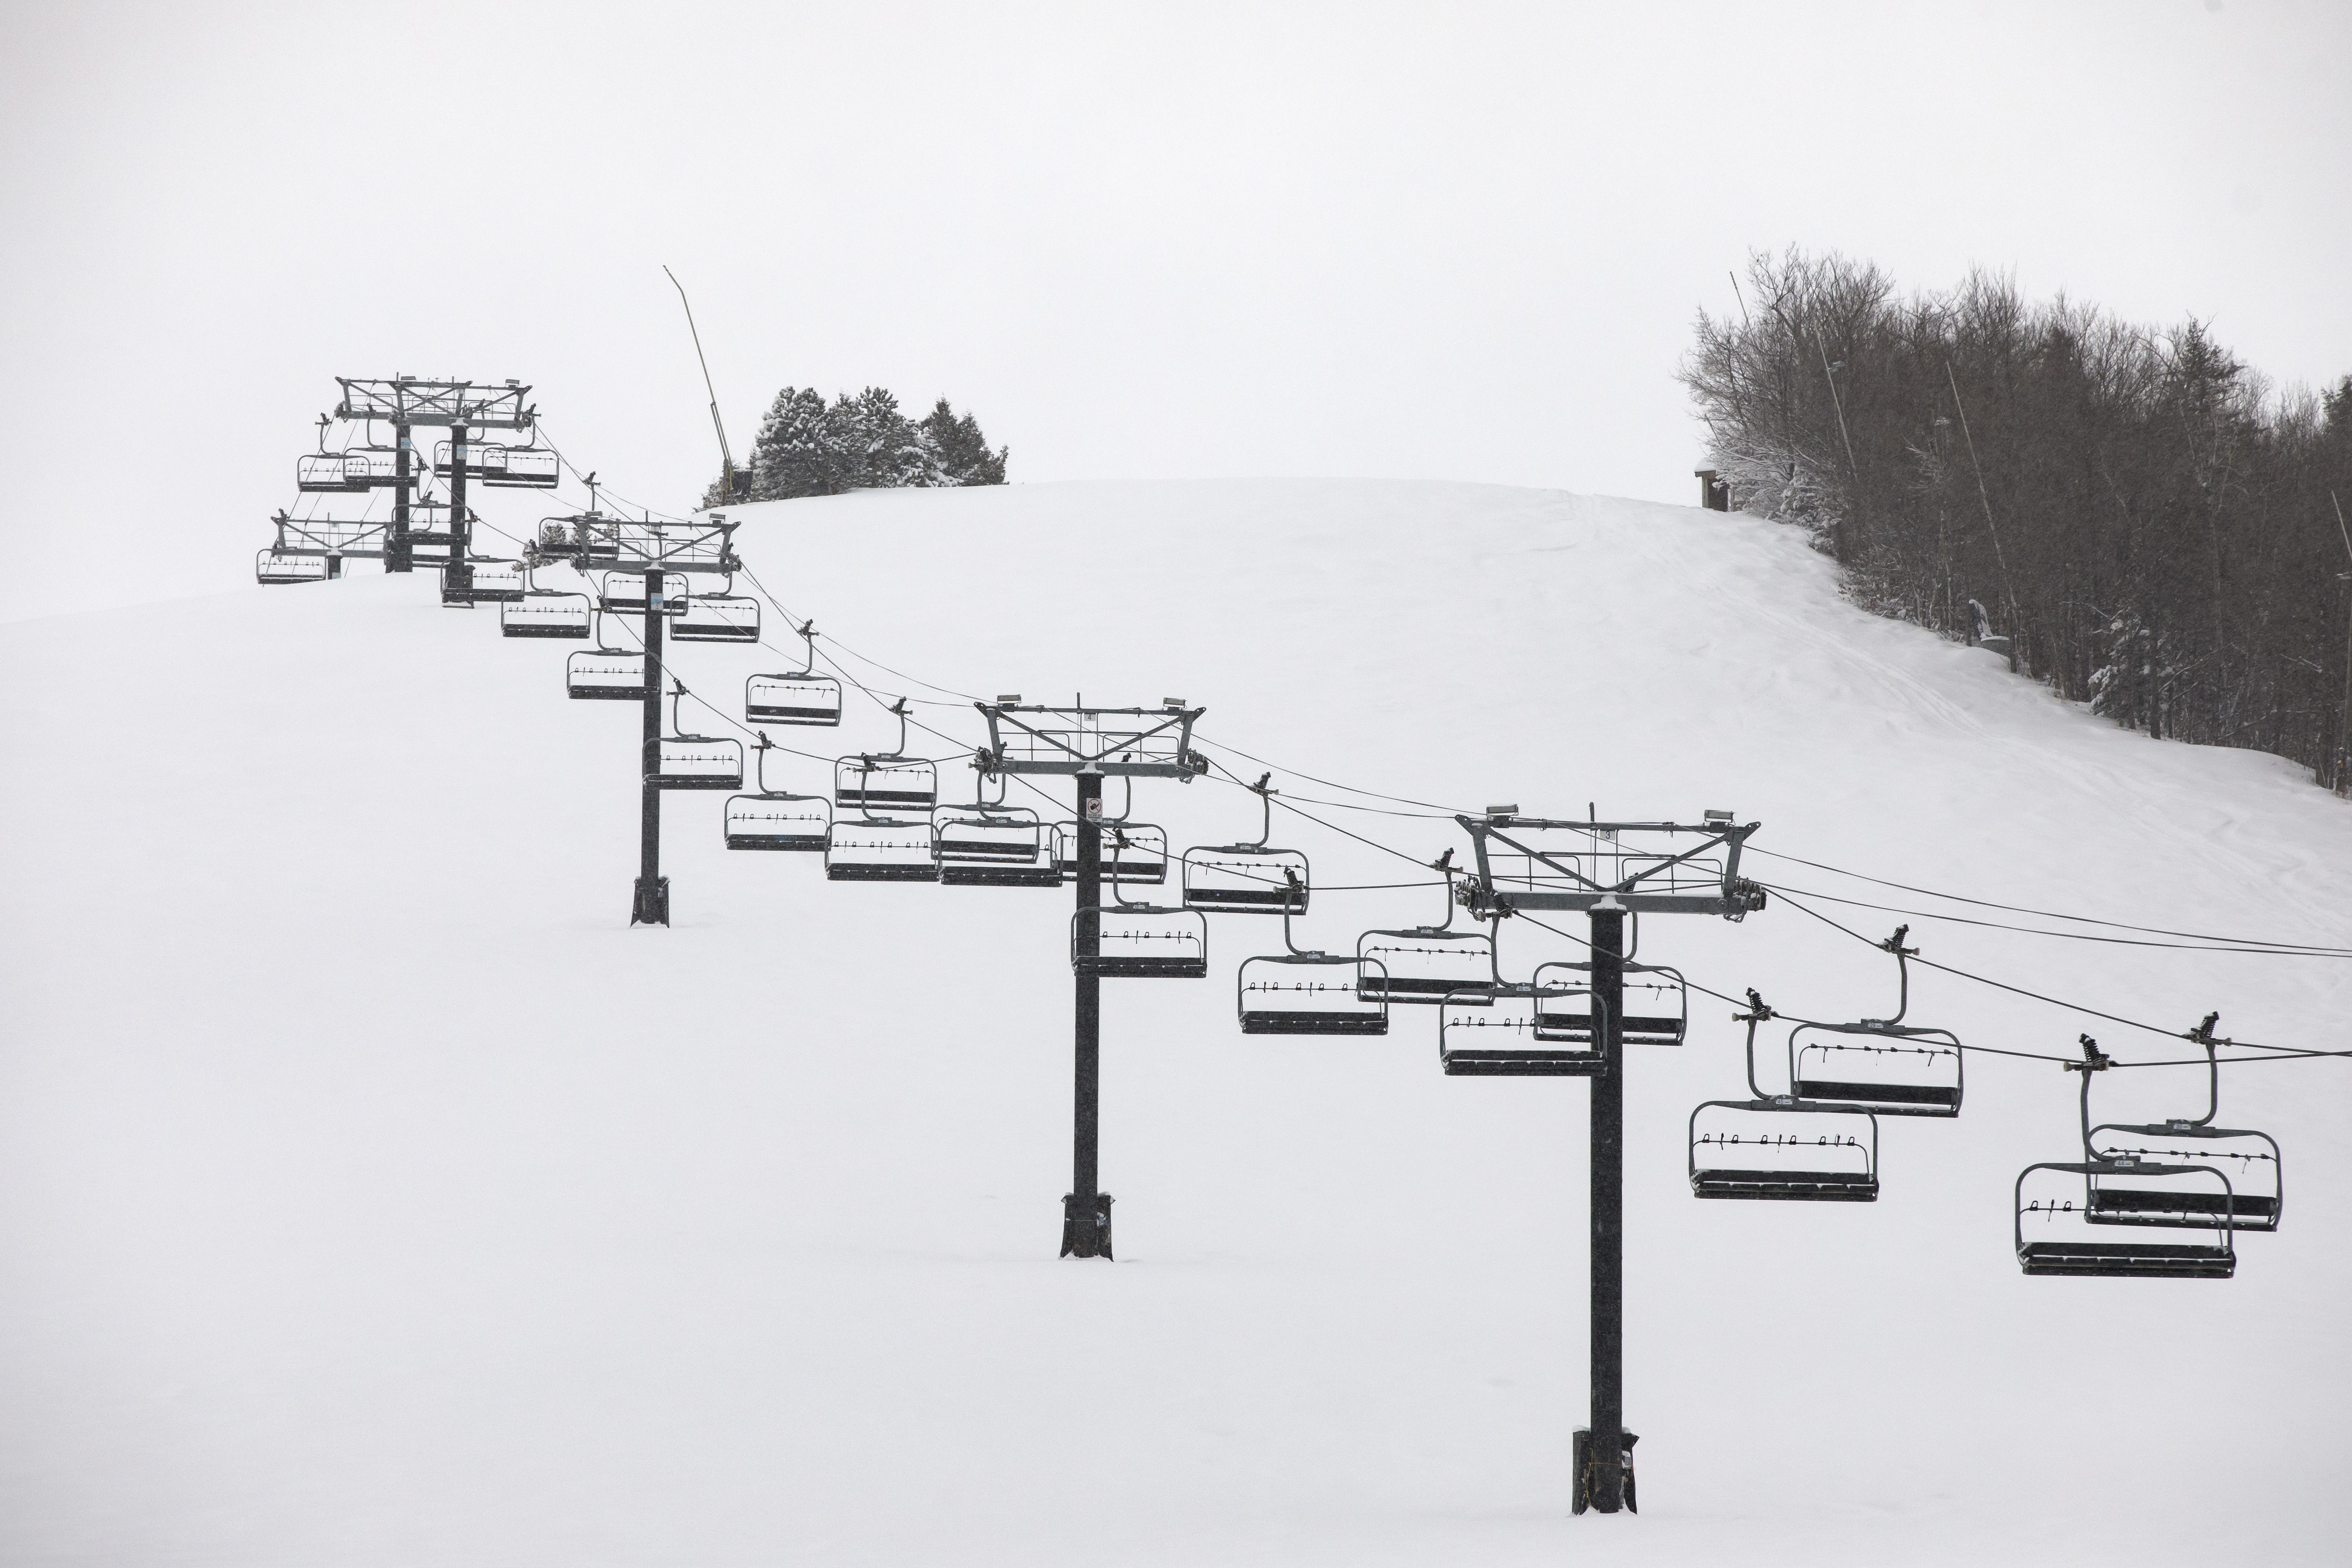 Planning a ski trip? Fewer runs open amid mild weather across Canada